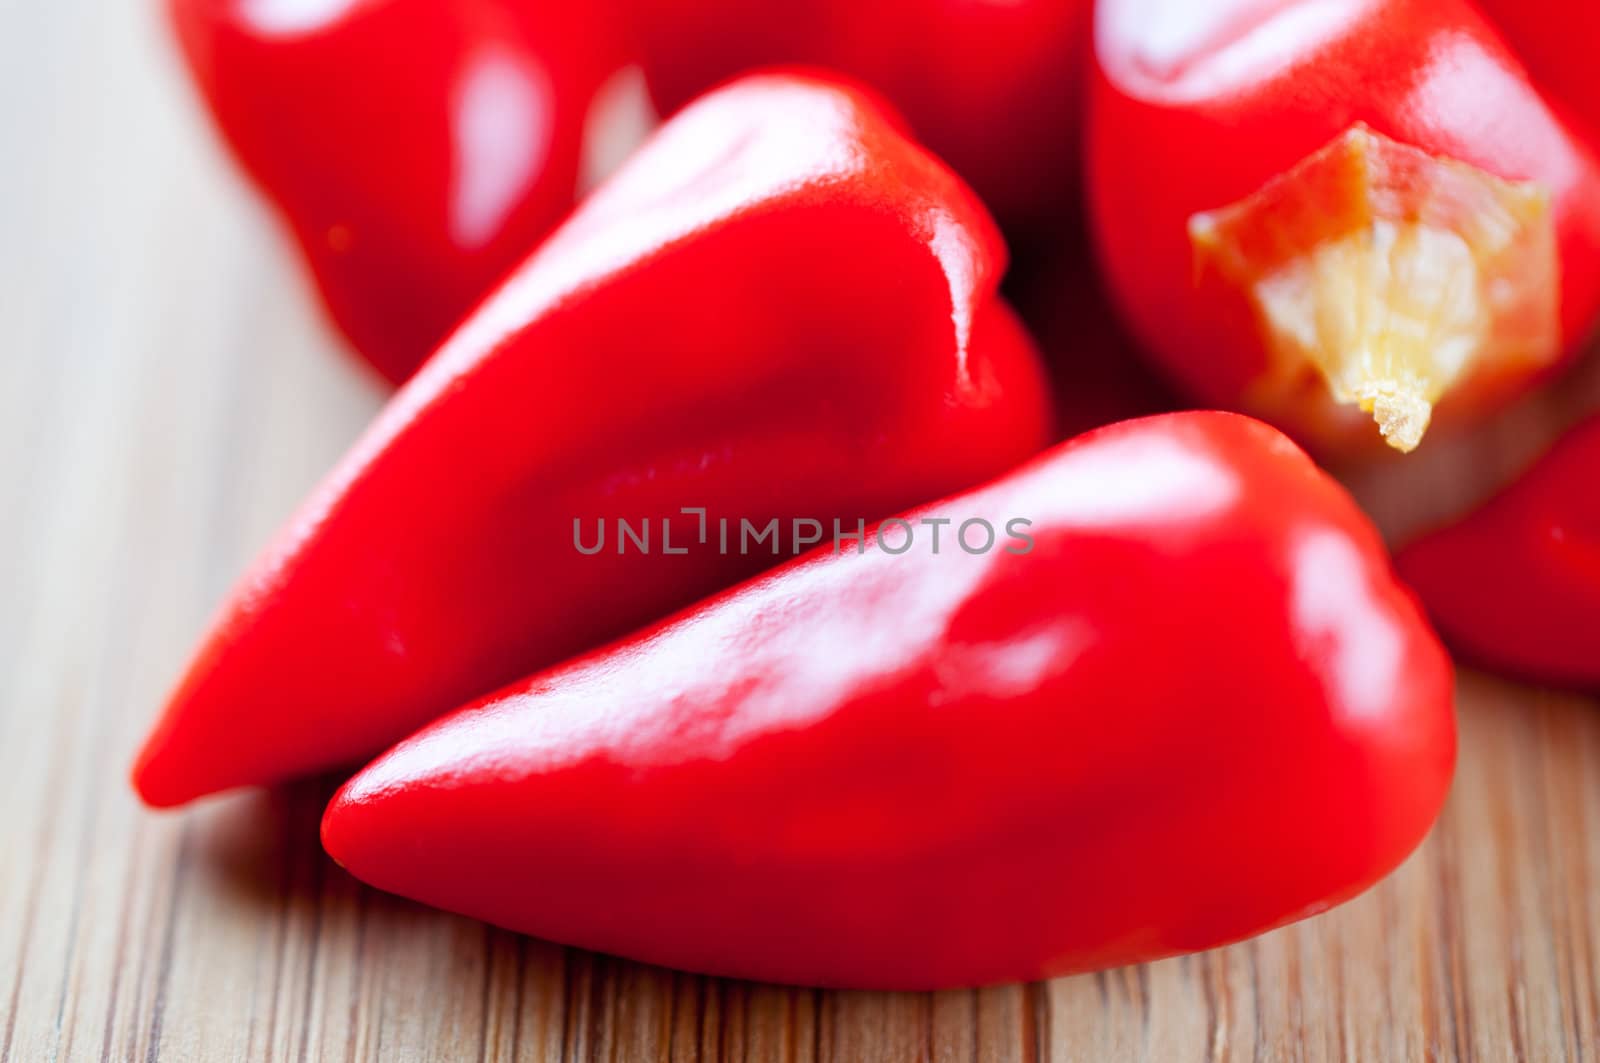 Canned chili pepper on a cutting board  by Nanisimova